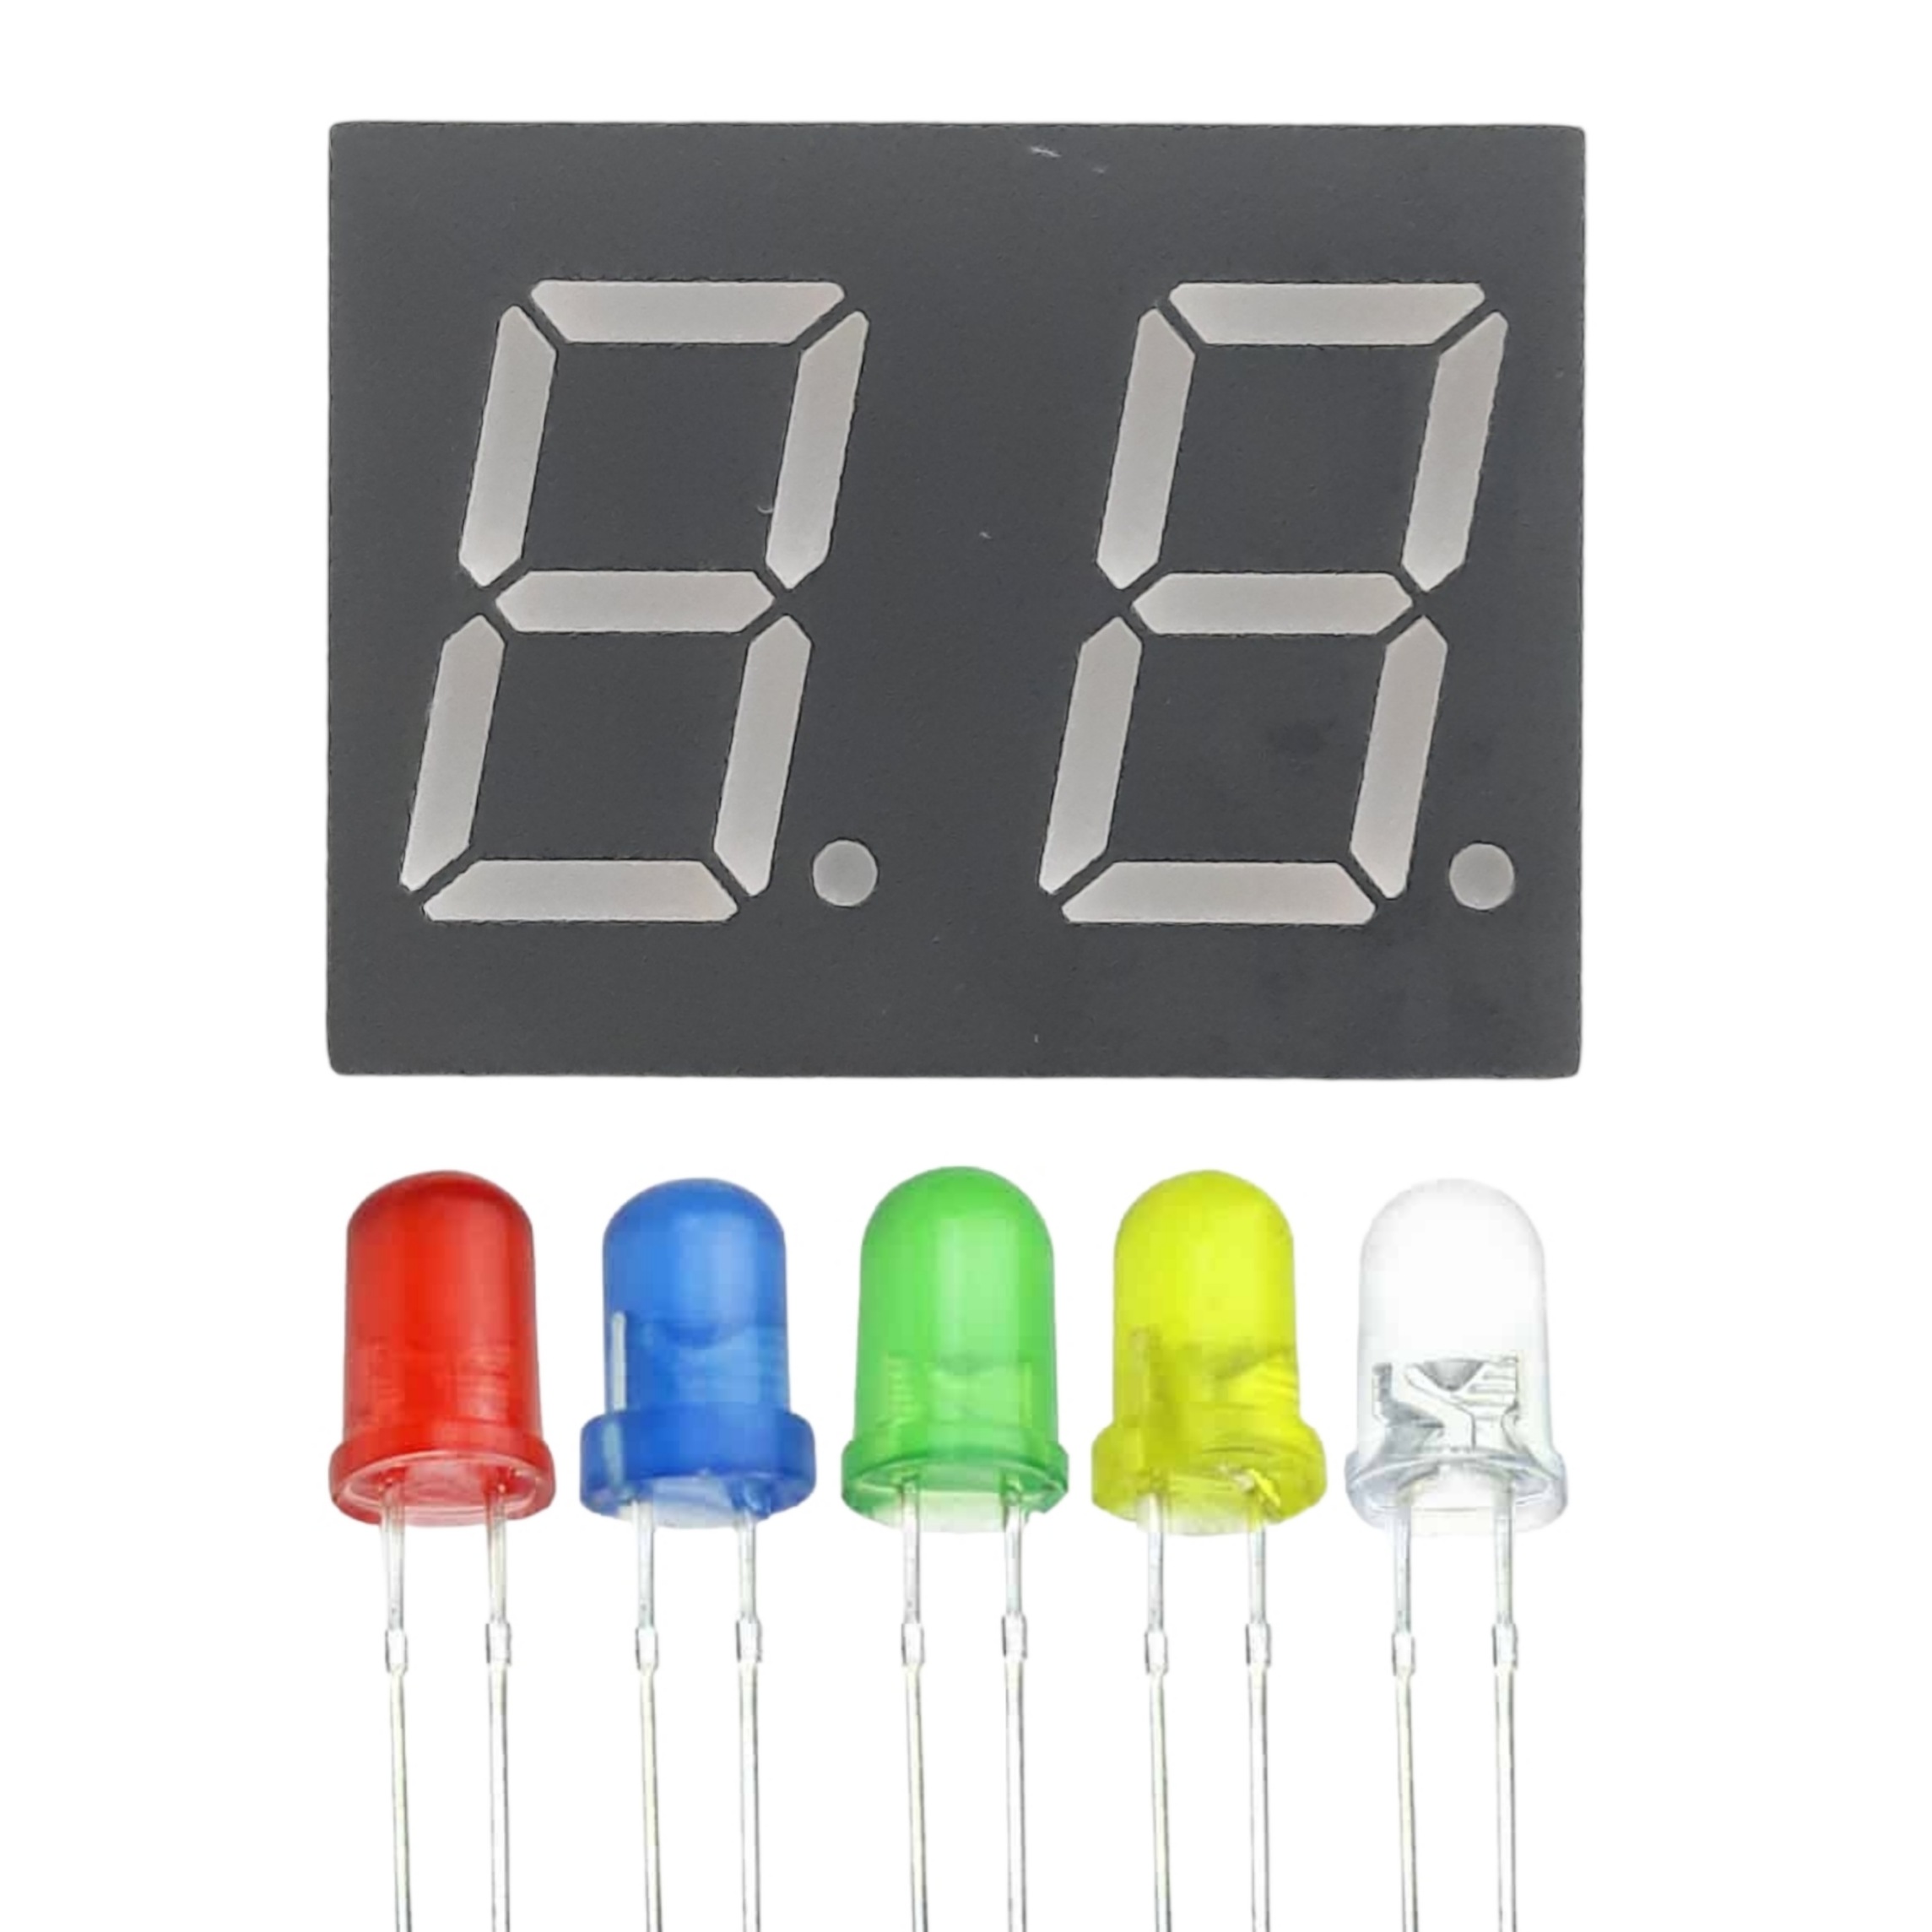 Value Display Potentiometers